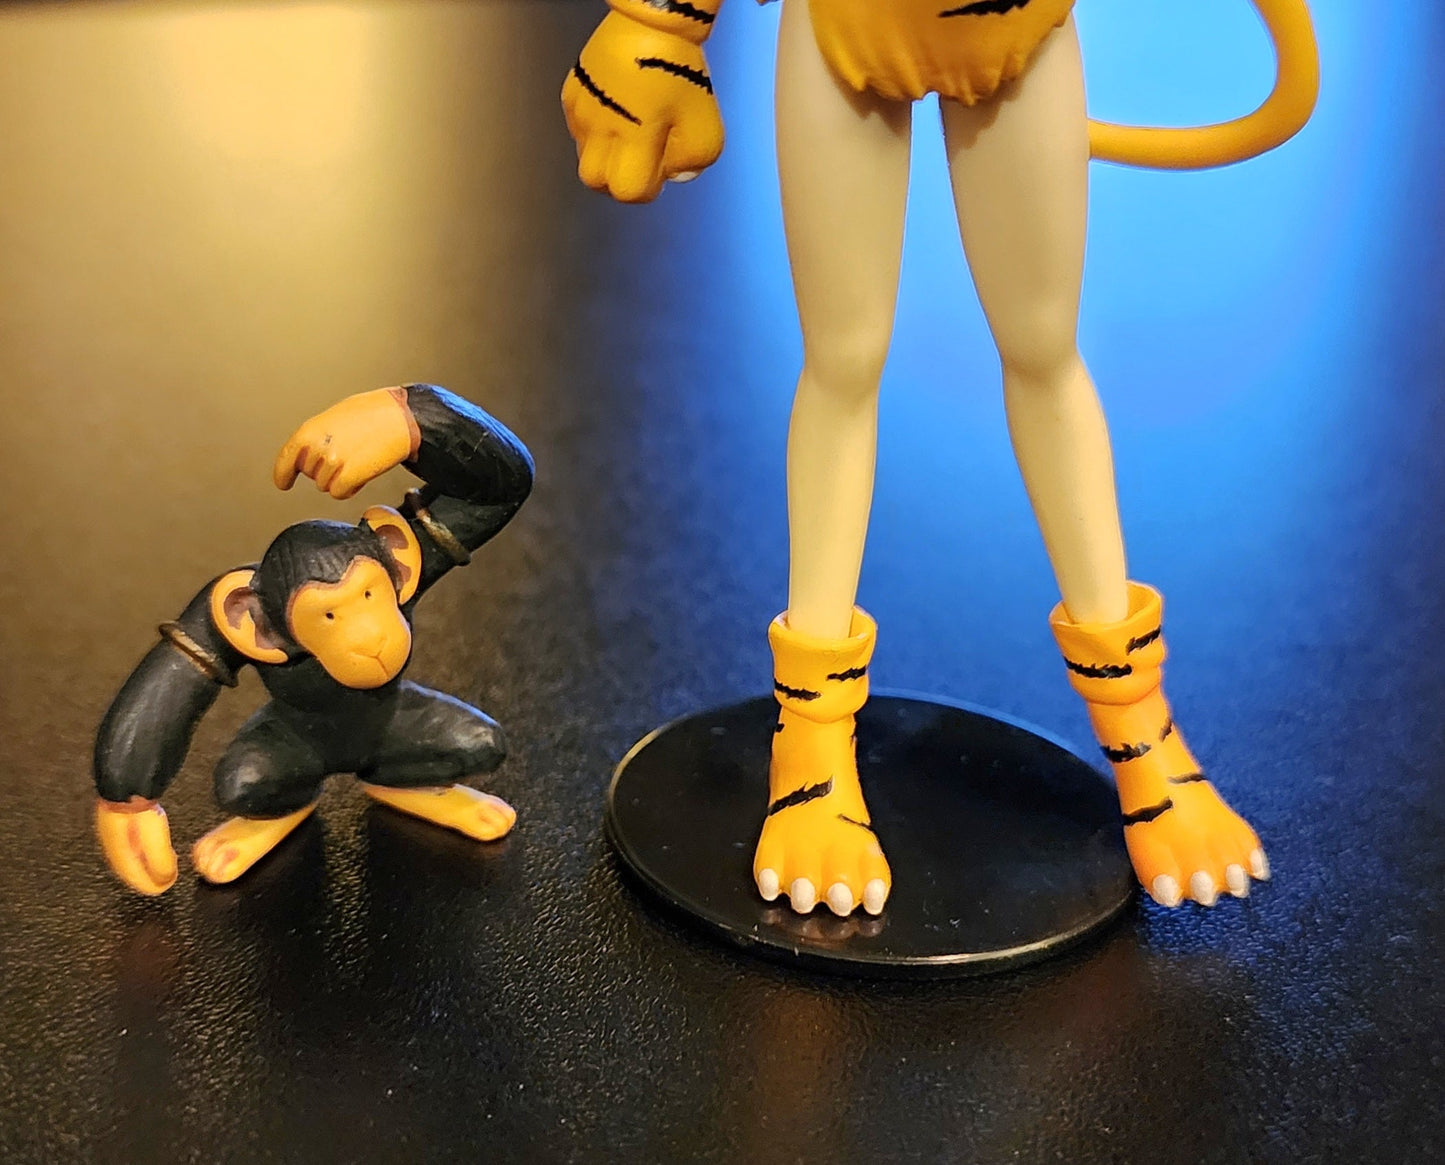 Cham Cham Samurai Shodown SR Series Gashapon Figure with Paku Paku Monkey